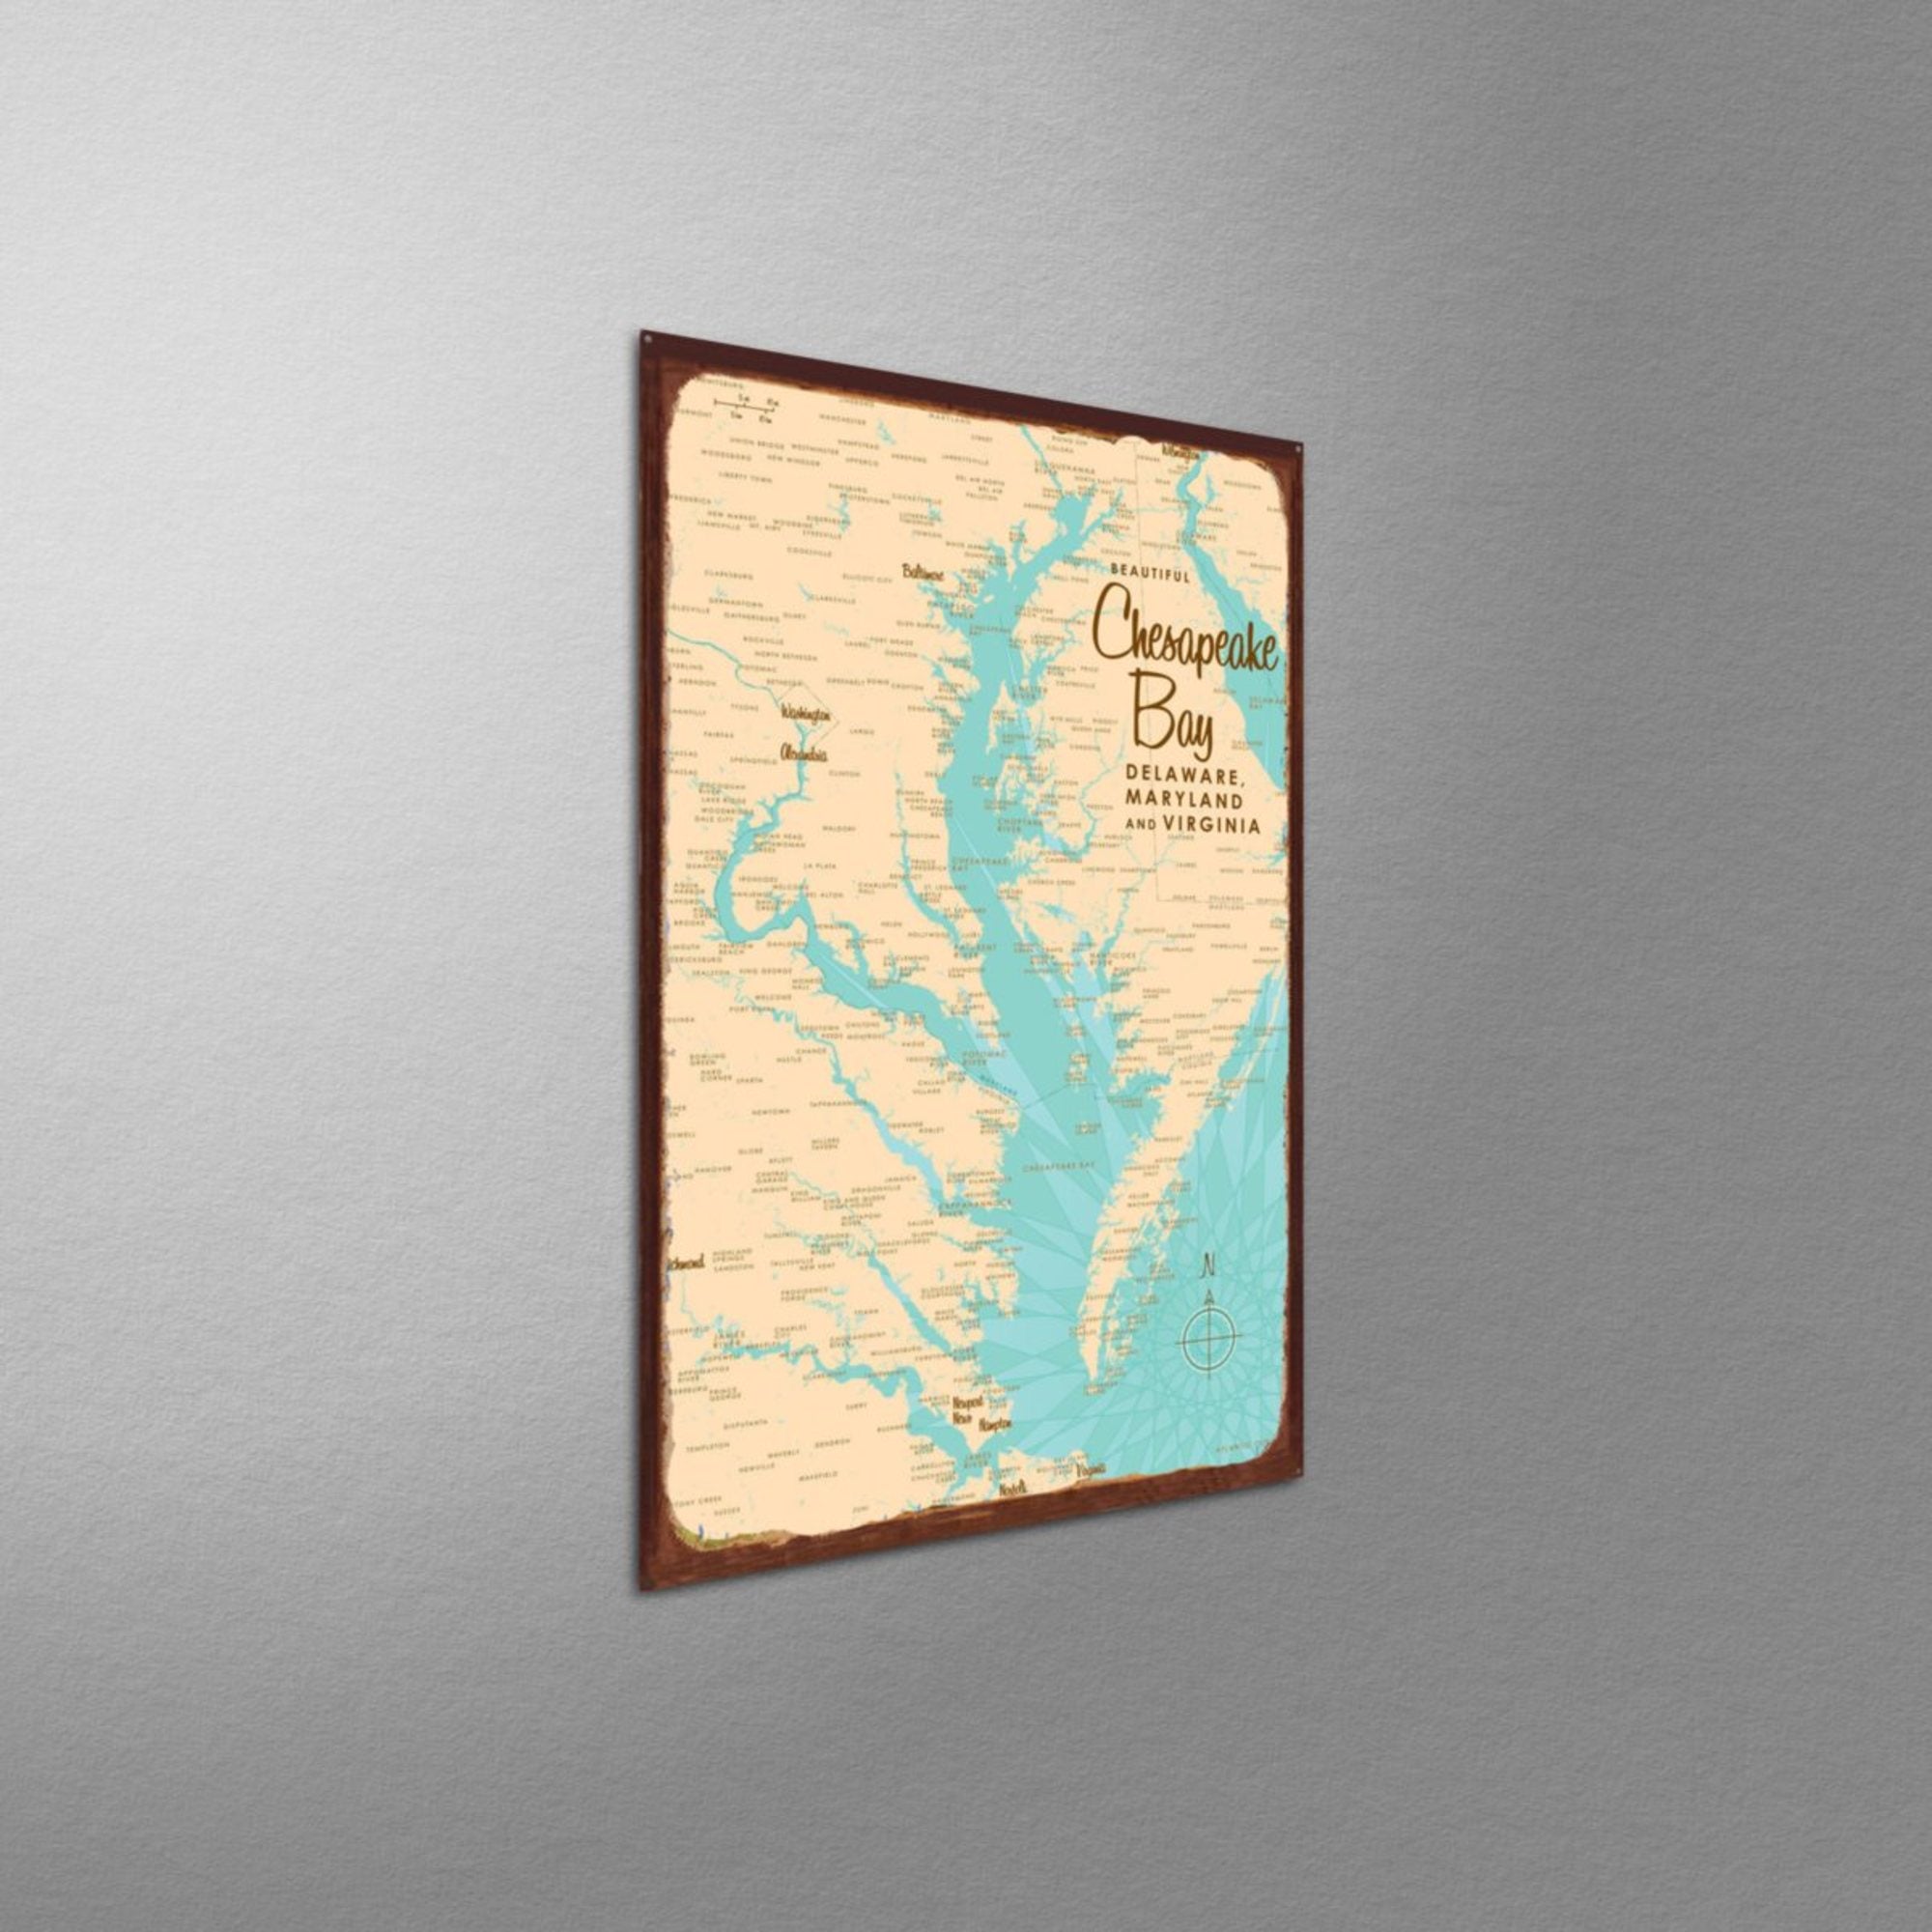 Chesapeake Bay Maryland Virginia, Rustic Metal Sign Map Art